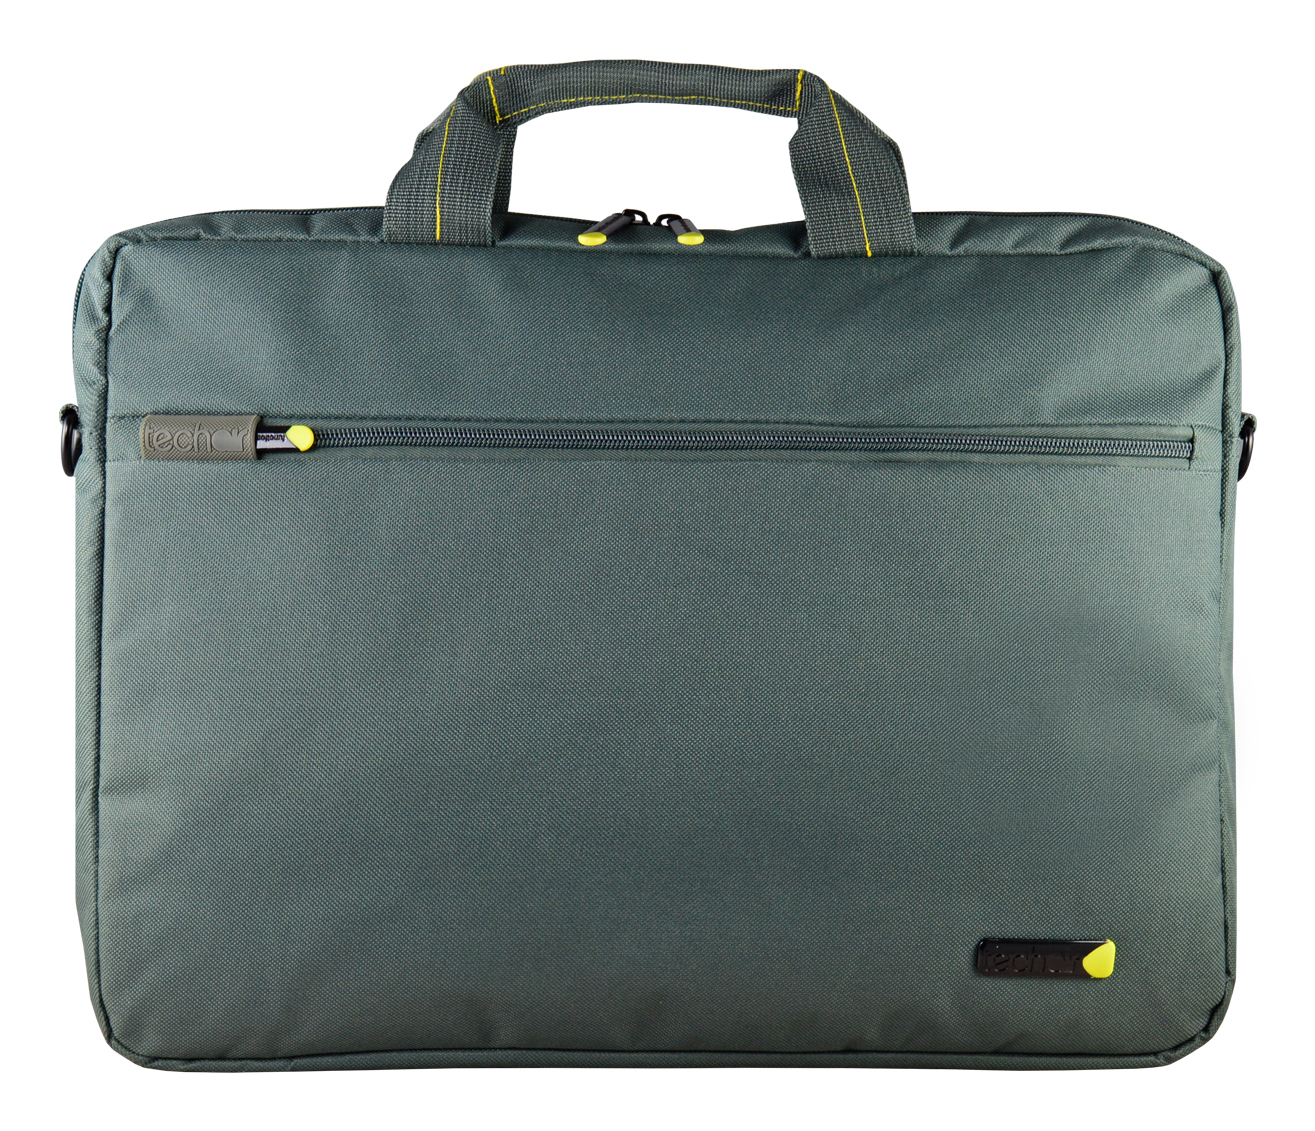 Techair Classic essential 16 - 17.3" shoulder bag Grey